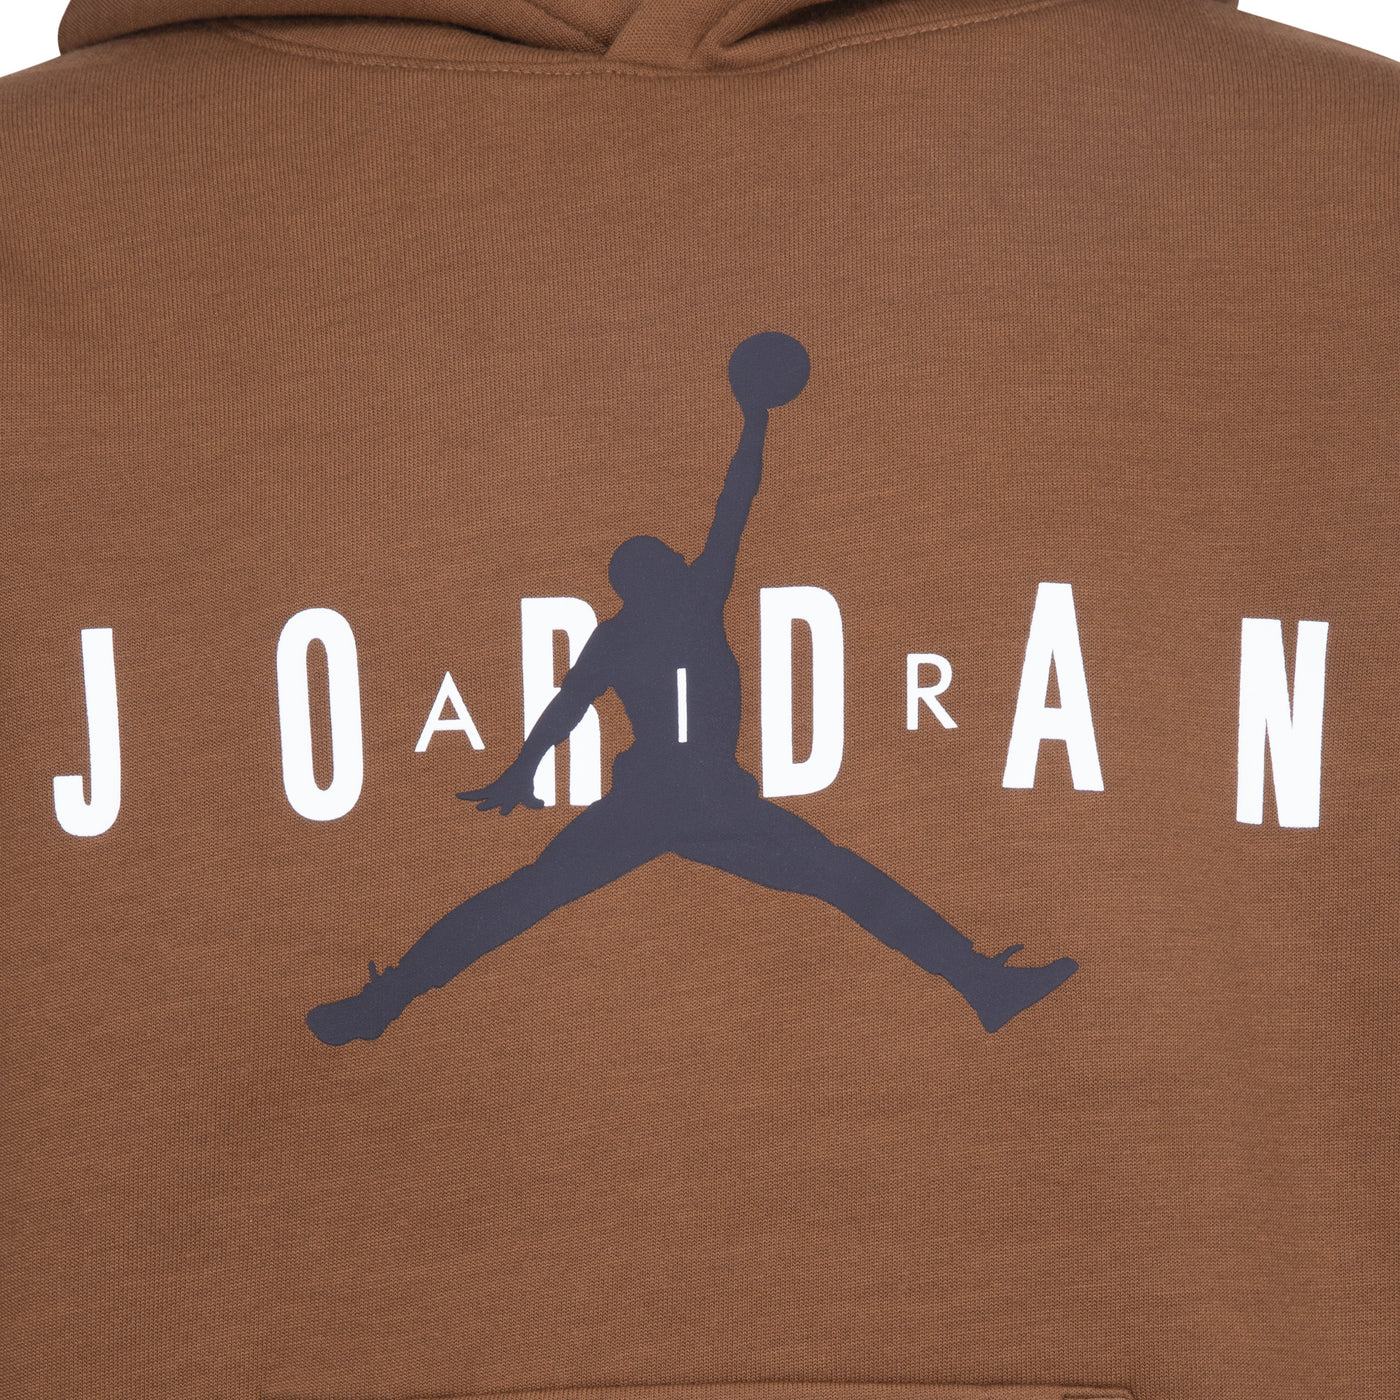 Jordan Brown Jumpman Sustainable Pullover